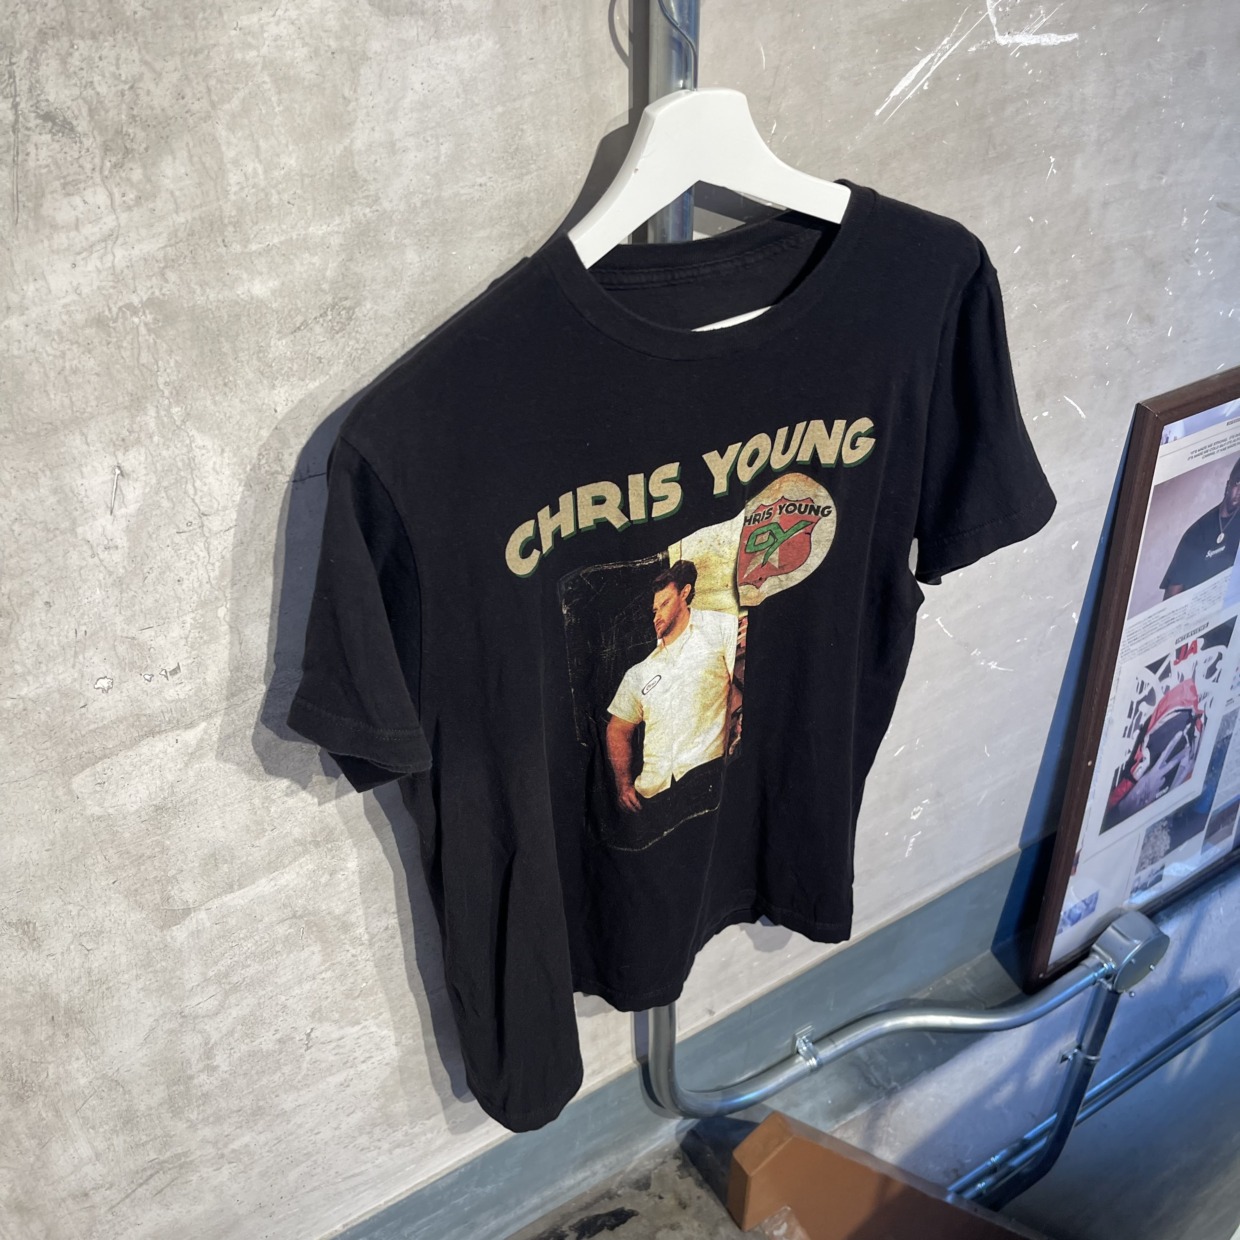 「CHRIS YOUNG」Artist T-shirts